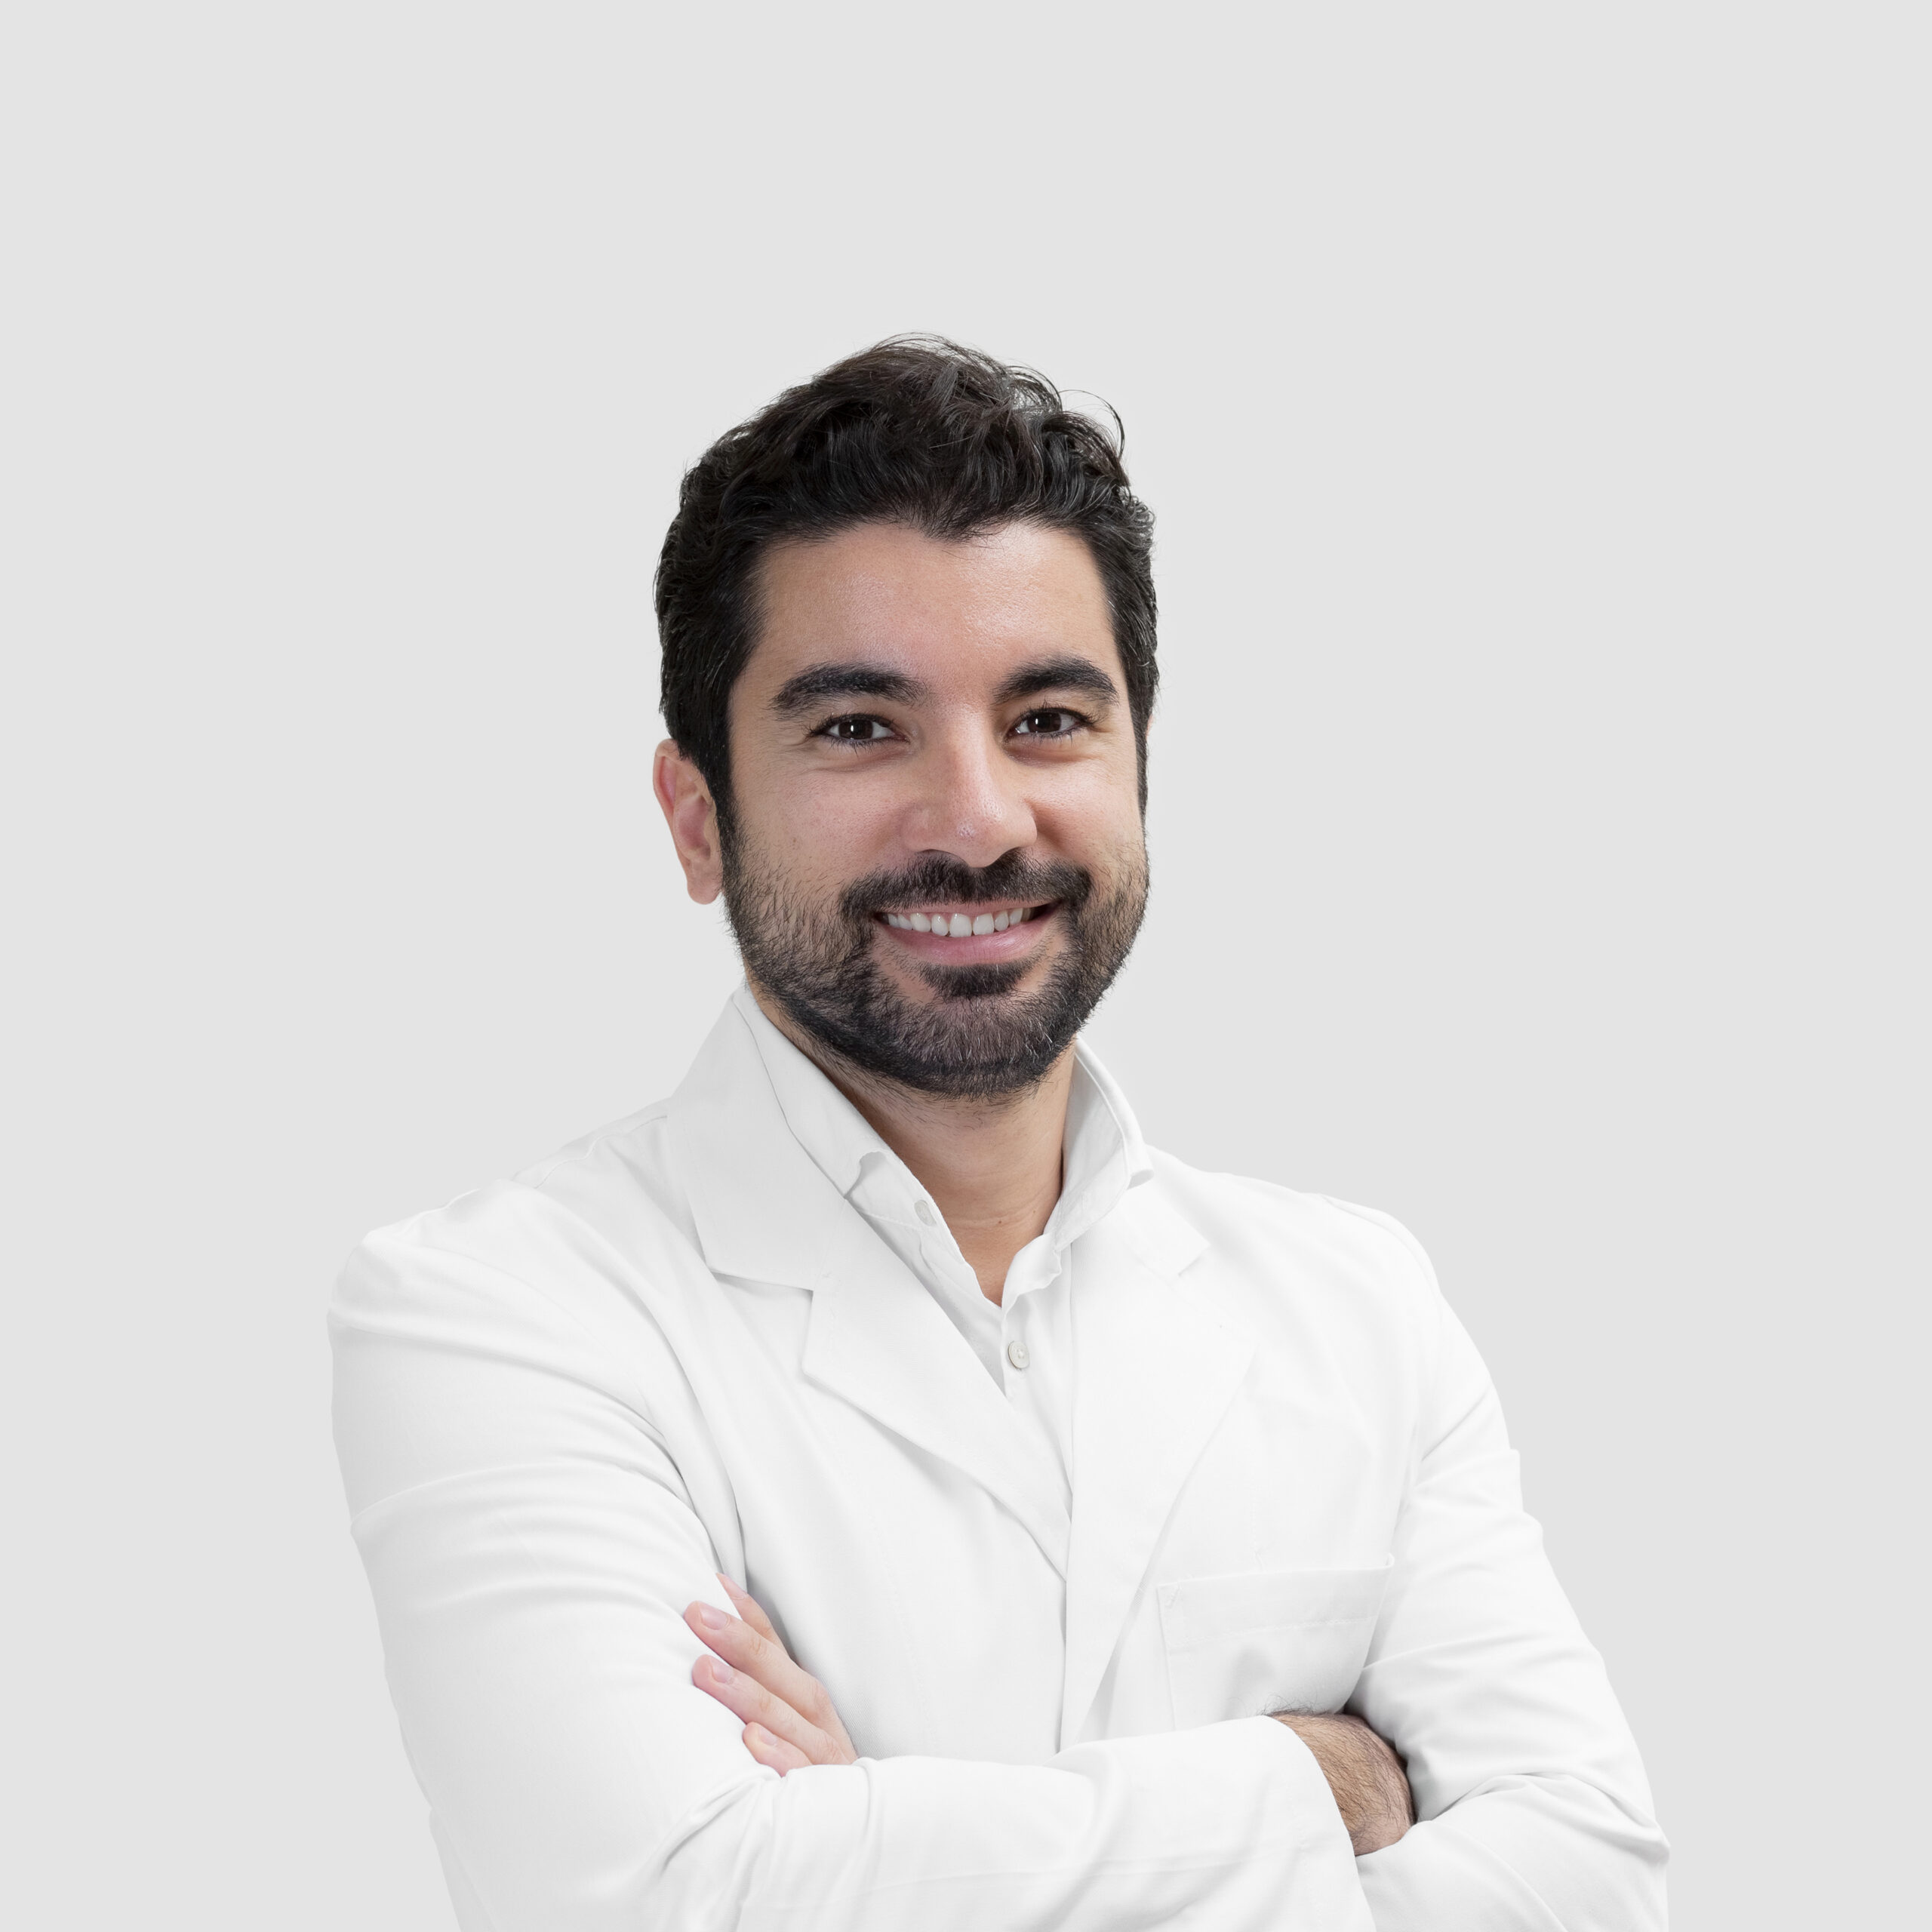 Oftalmólogo en Molina de Segura | Dr. Roberto Martínez | VI&BE